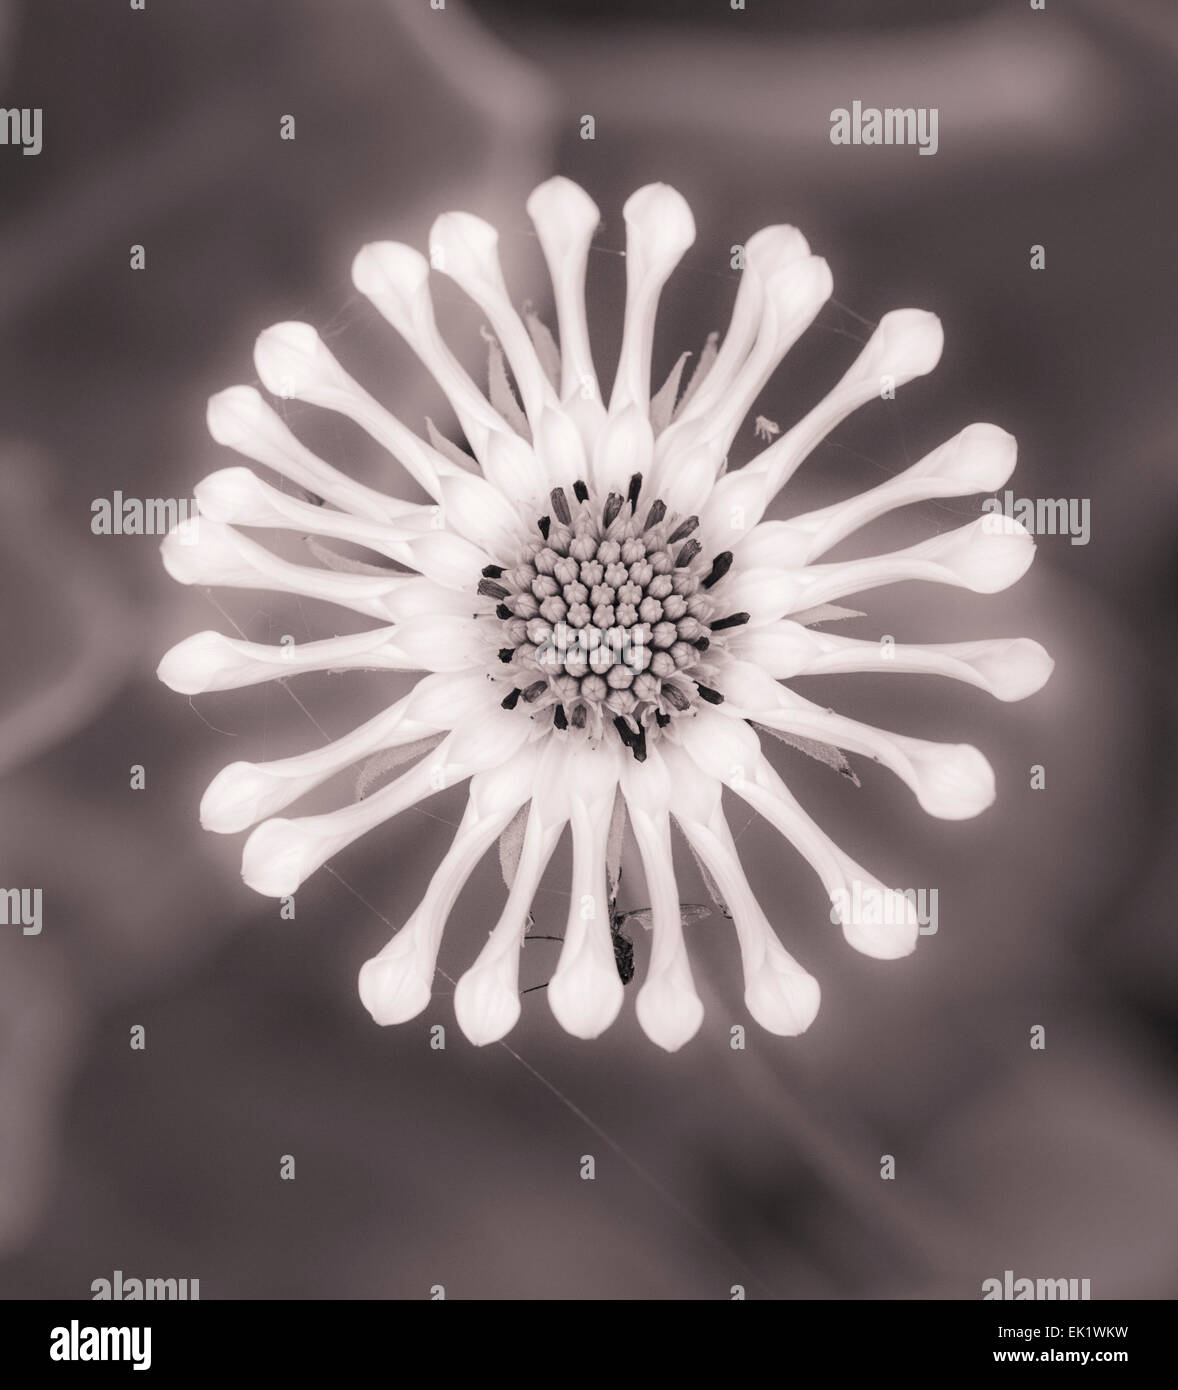 White Oestoespermum monochrome Stock Photo